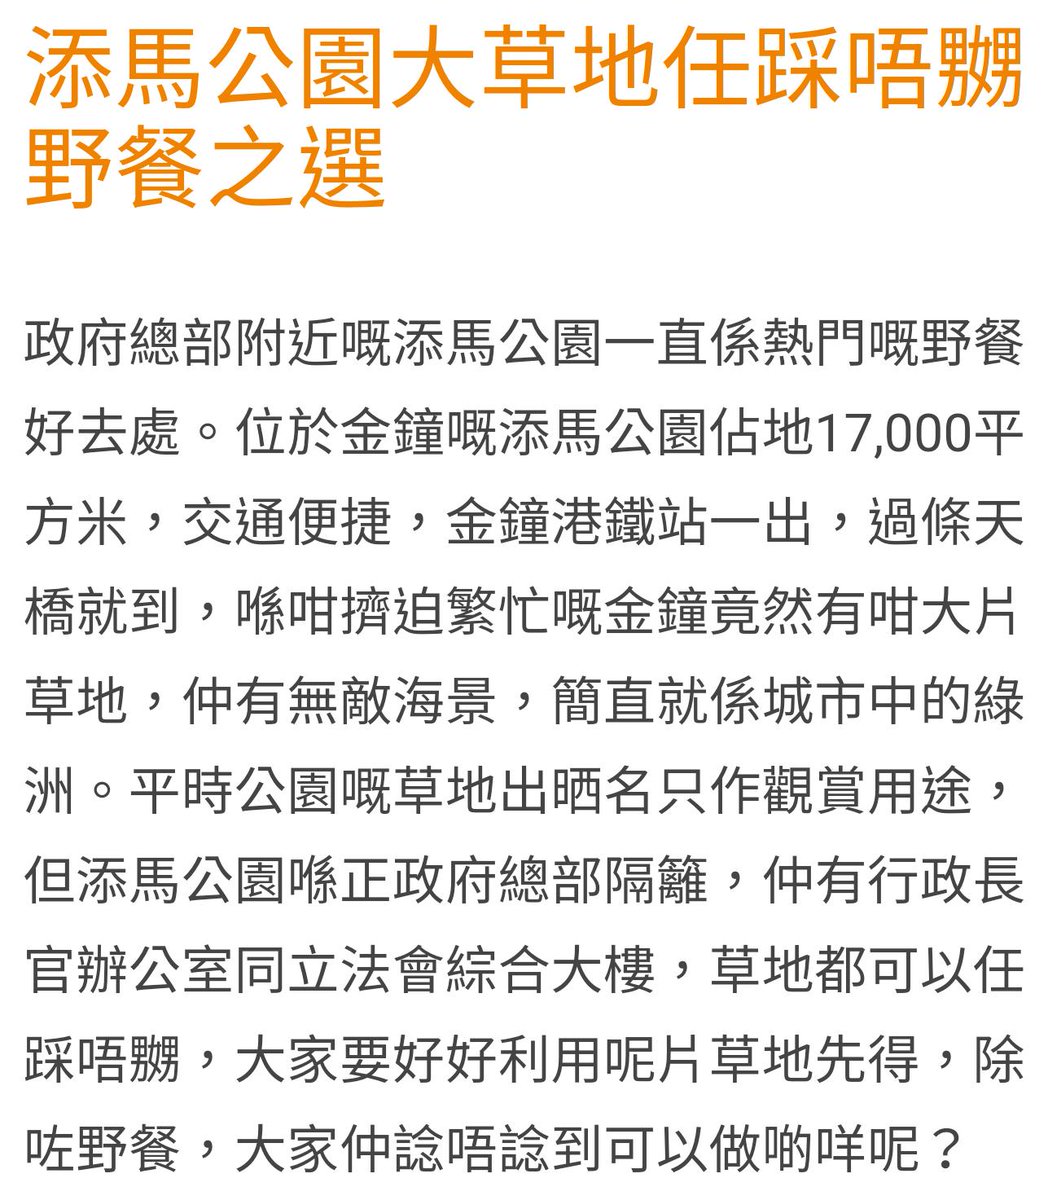 想野餐 識去一定去添馬公園 | 香港好去處 | 新假期 weekendhk.com/951666/lifesty…
Weekend Weekly encourages readers to go 'picnic' at Tamar Park #antiELAB #HongKong #612罷工 #NoChinaExtradition #NoExtraditionToChina